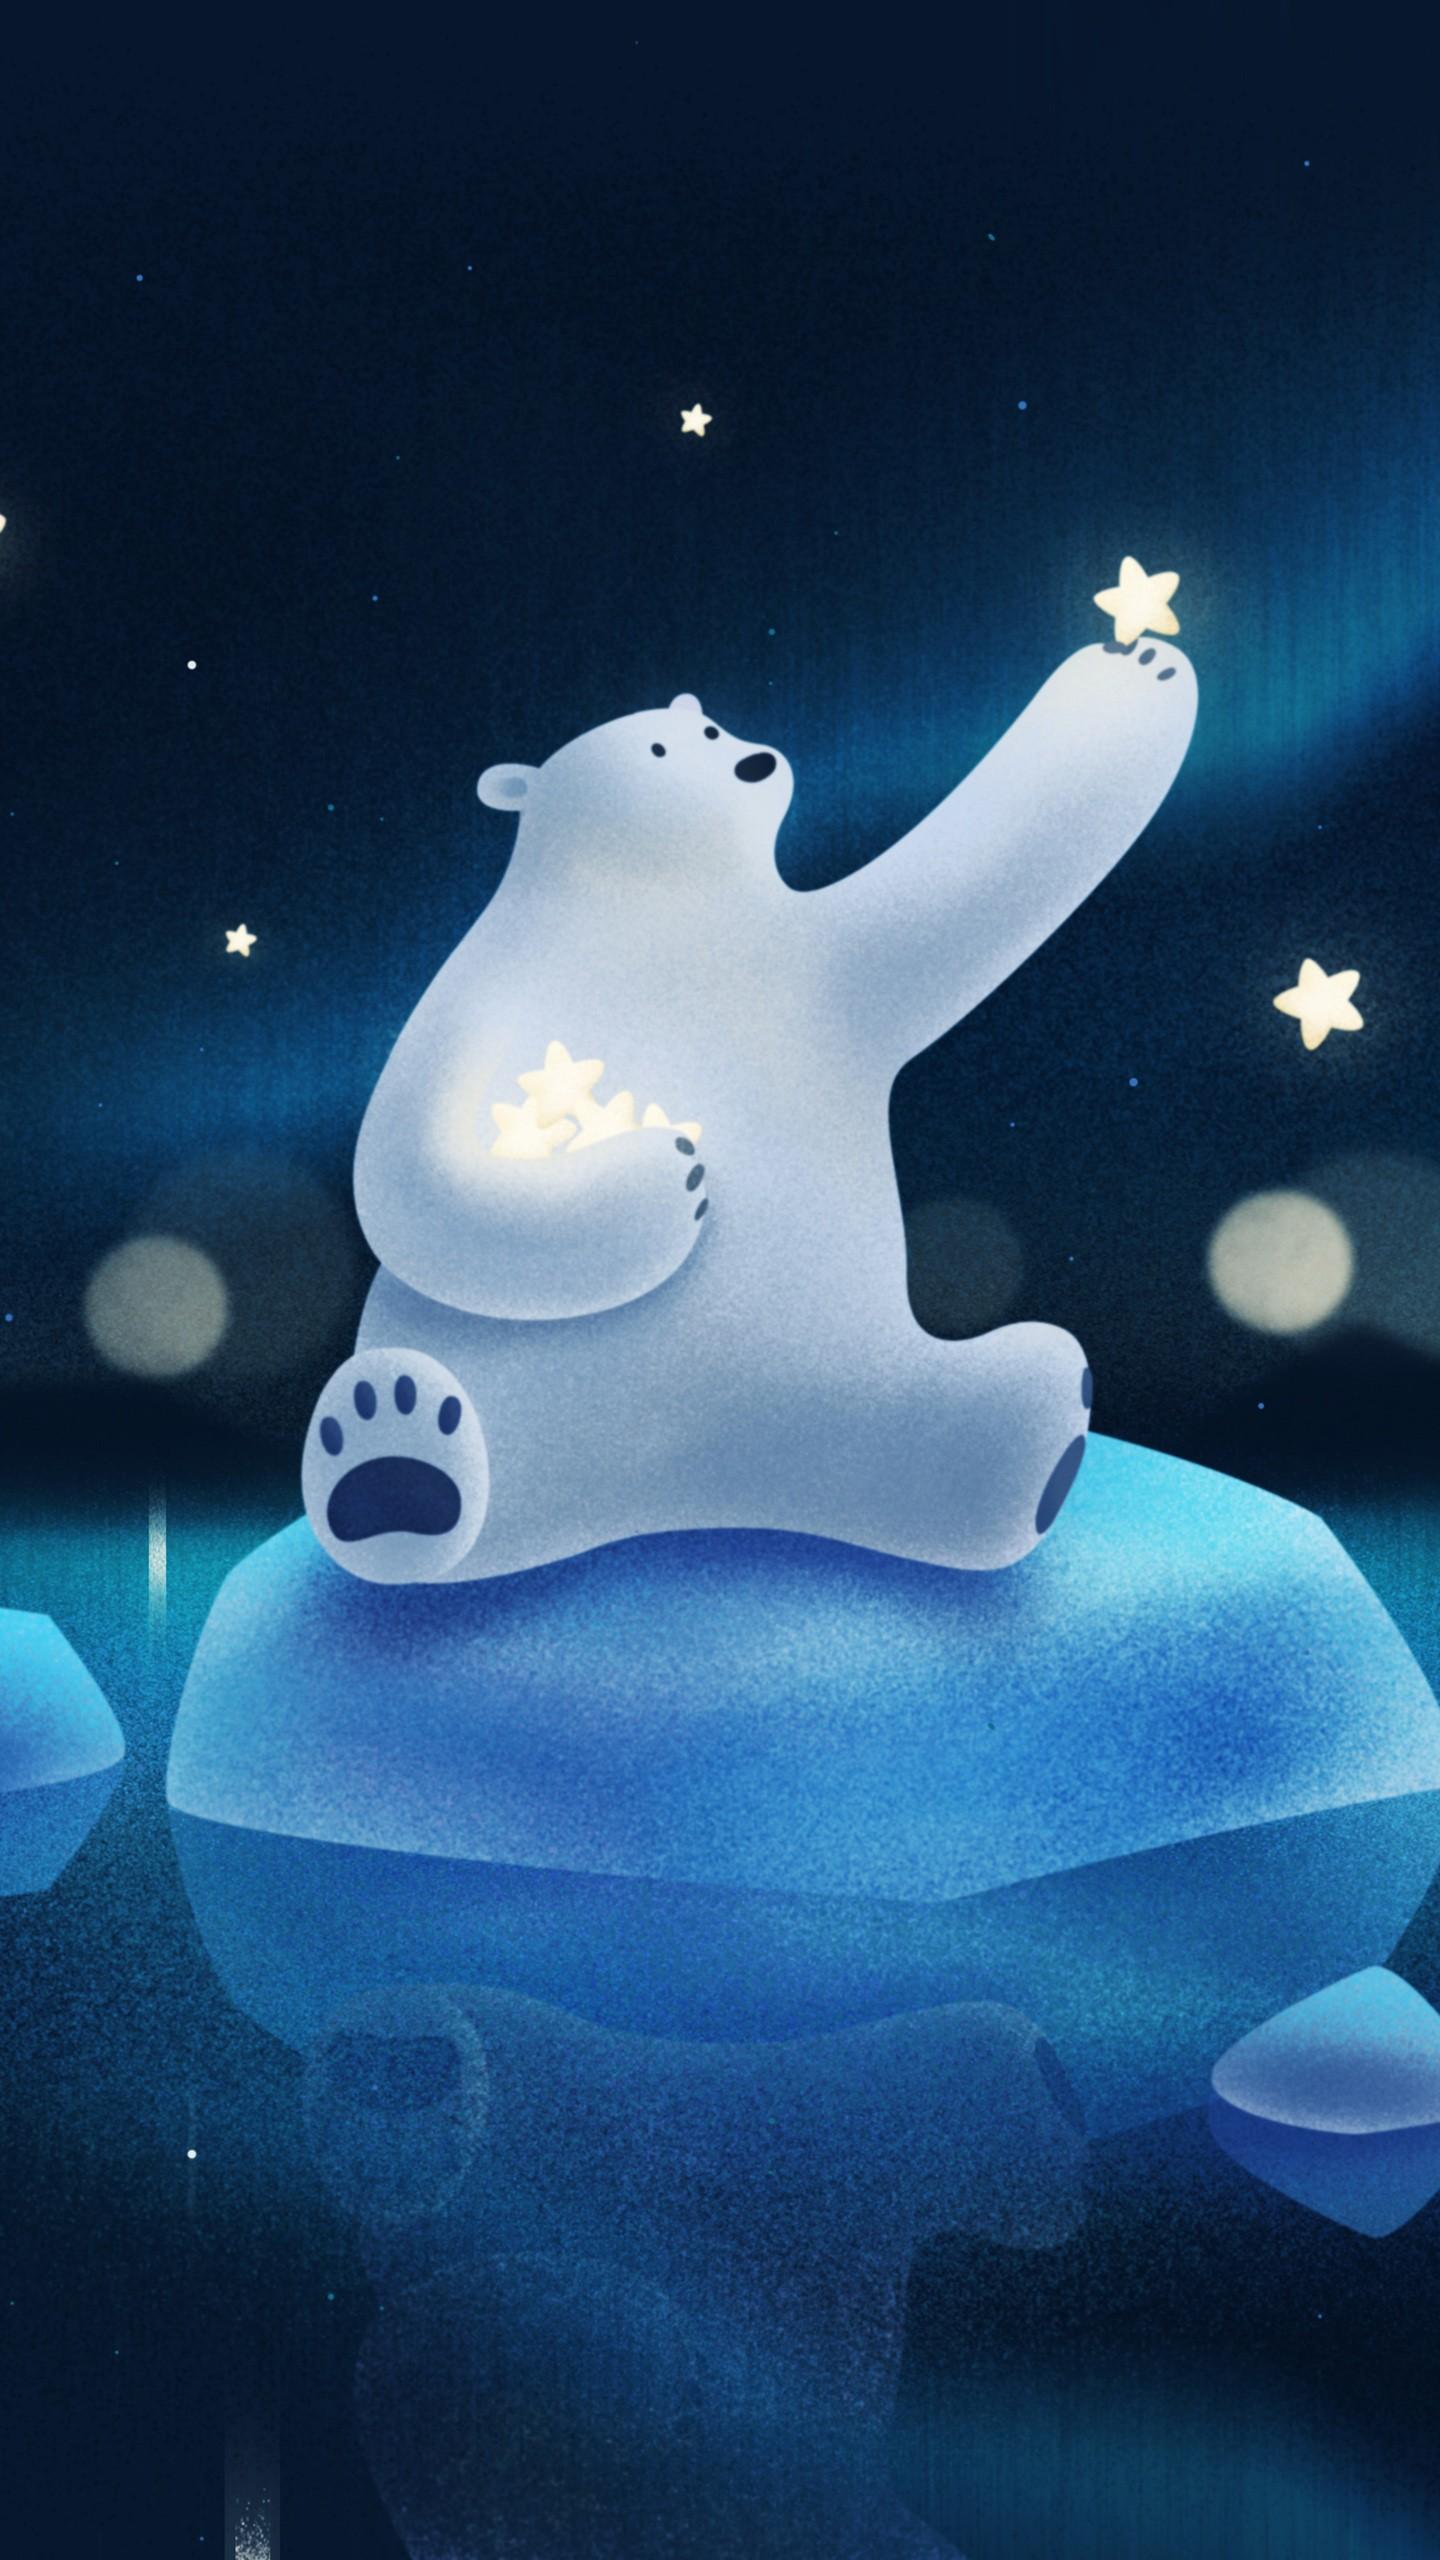 Cute Polar Bear Playing with Stars Wallpaper. HD